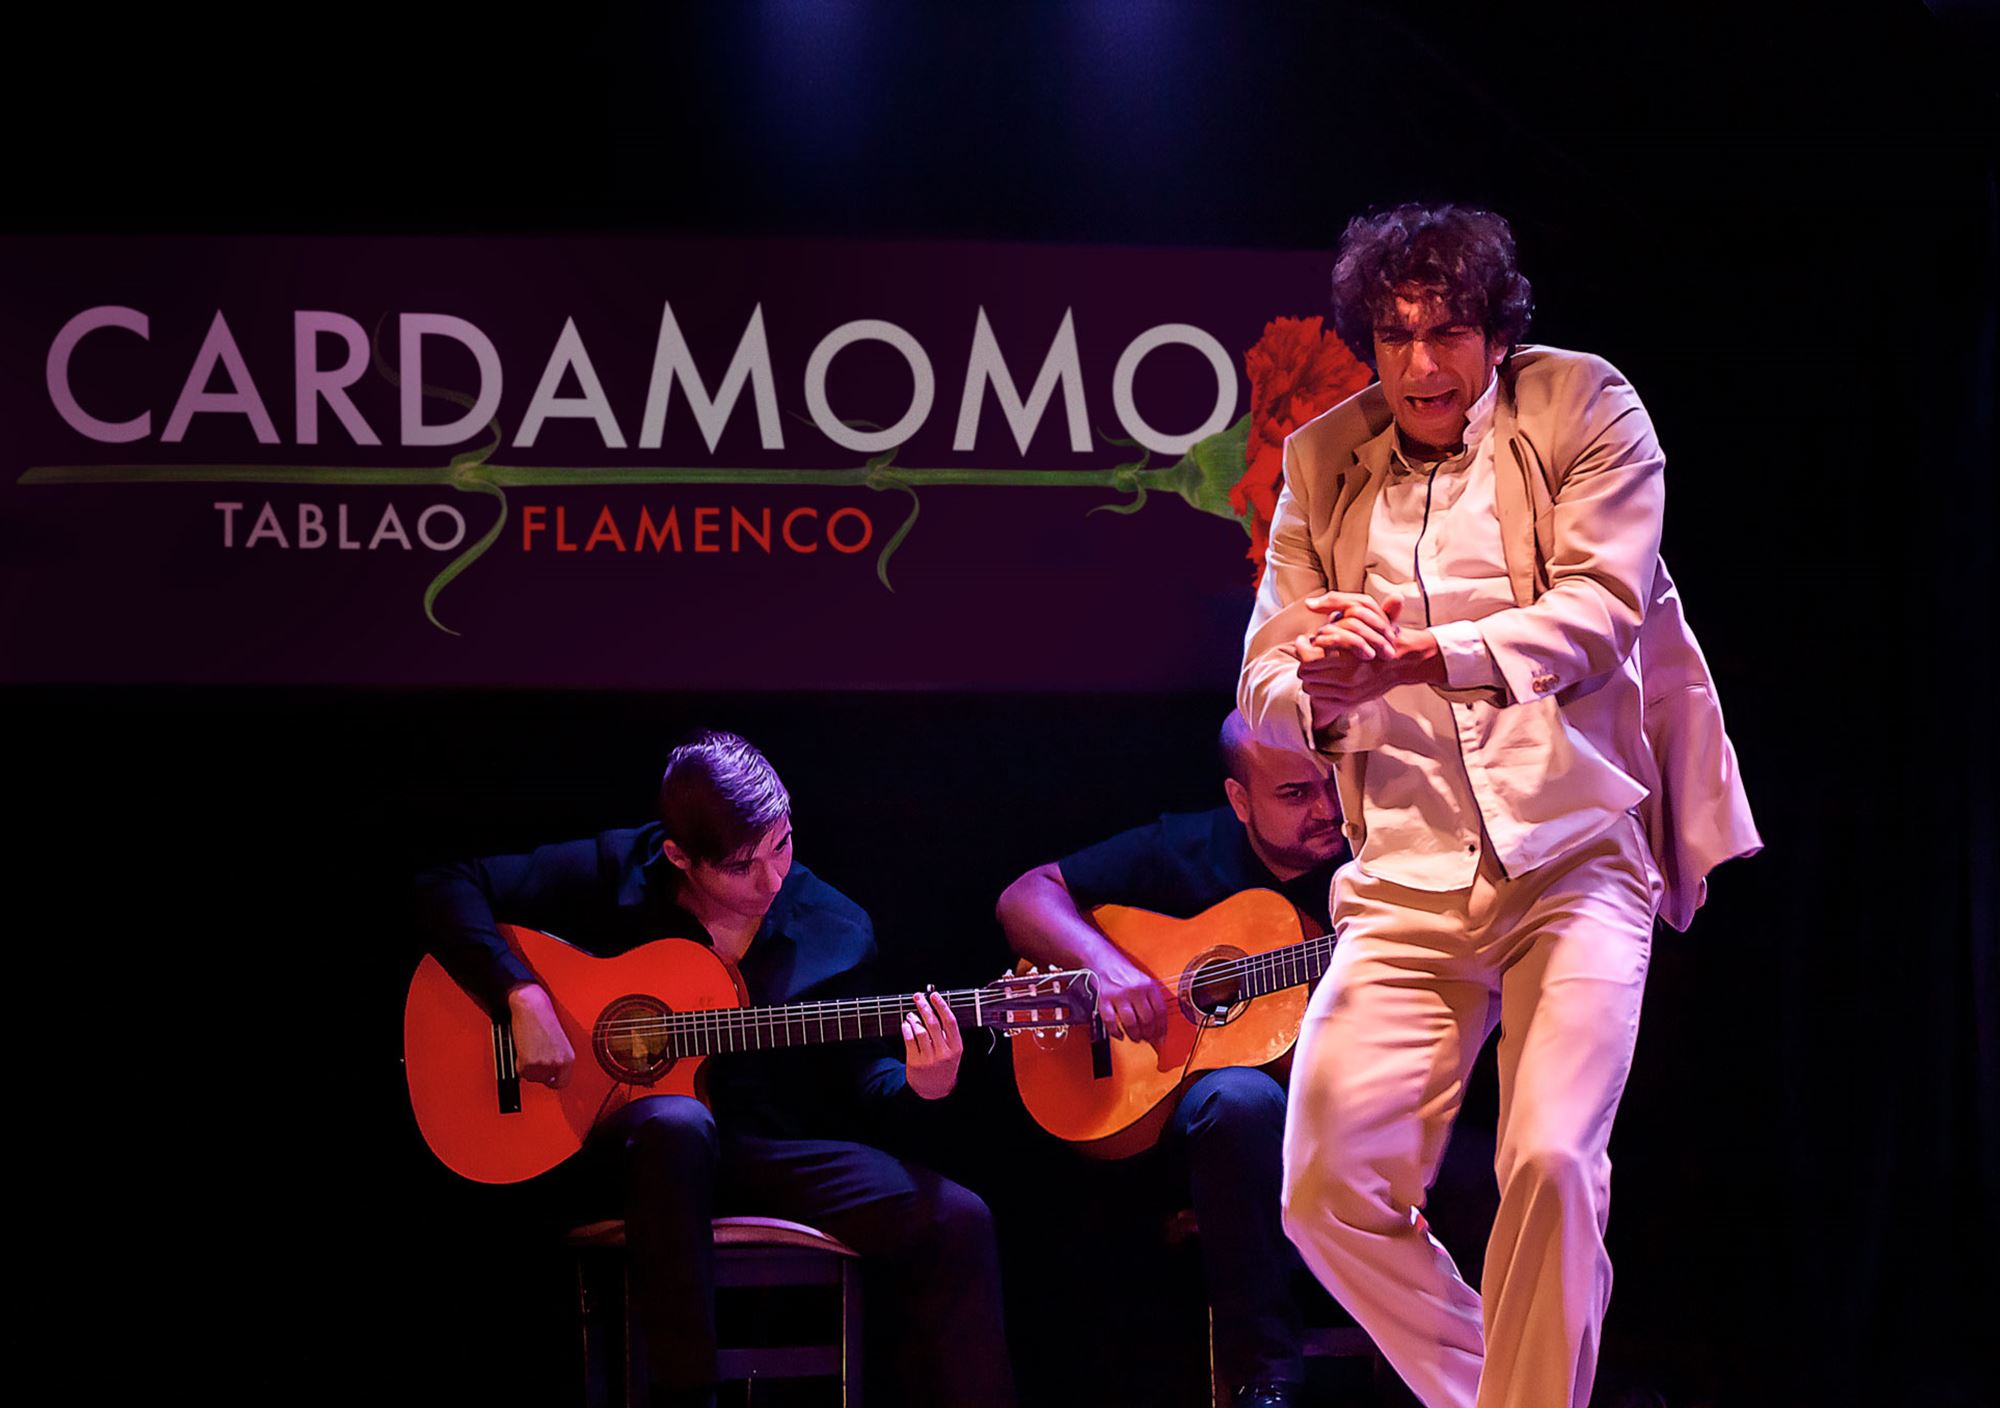 book booking tickets online Show in Cardamomo Tablao Flamenco